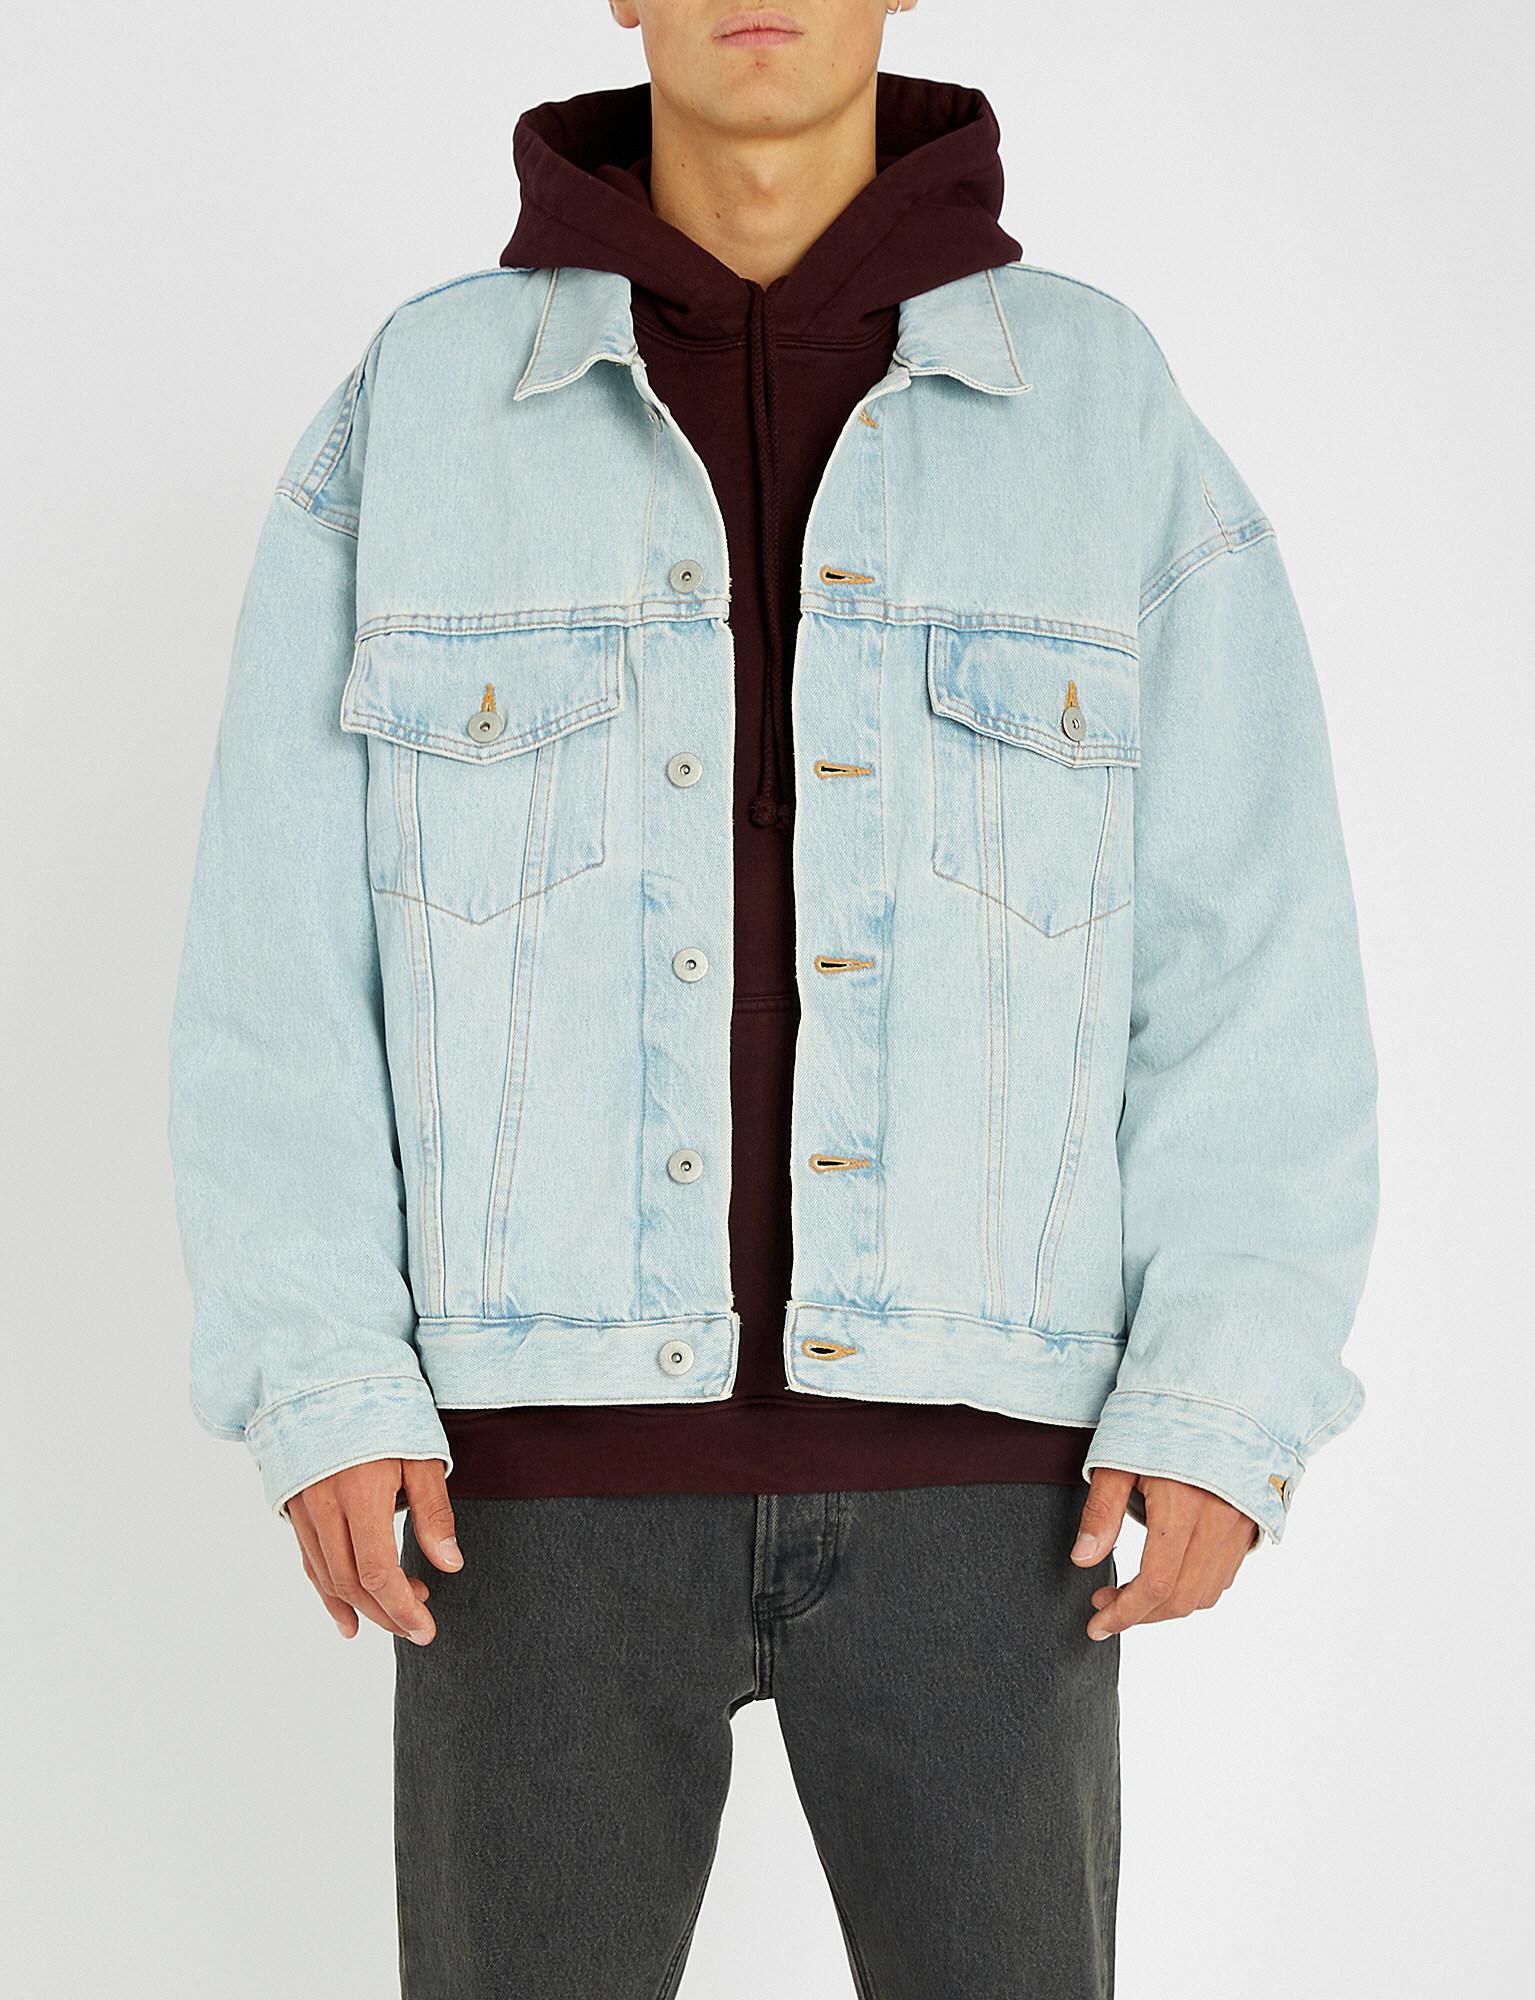 Yeezy Season 5 Denim Jacket in Faded Indigo (Blue) for Men - Lyst